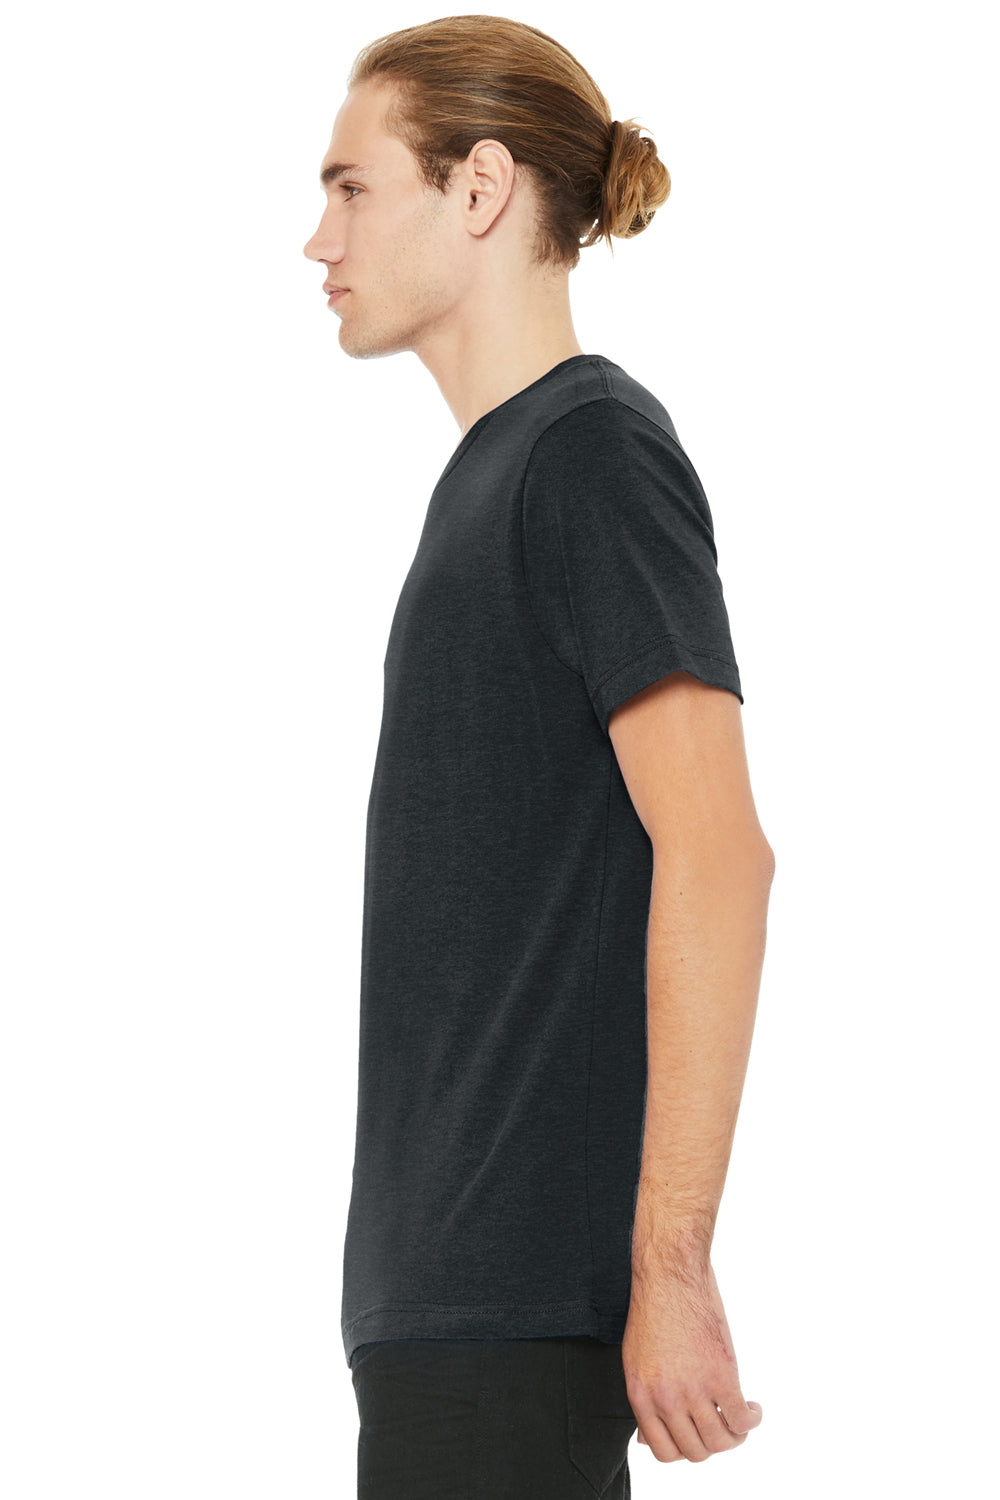 Bella + Canvas BC3005CVC Mens CVC Short Sleeve V-Neck T-Shirt Heather Dark Grey Model Side